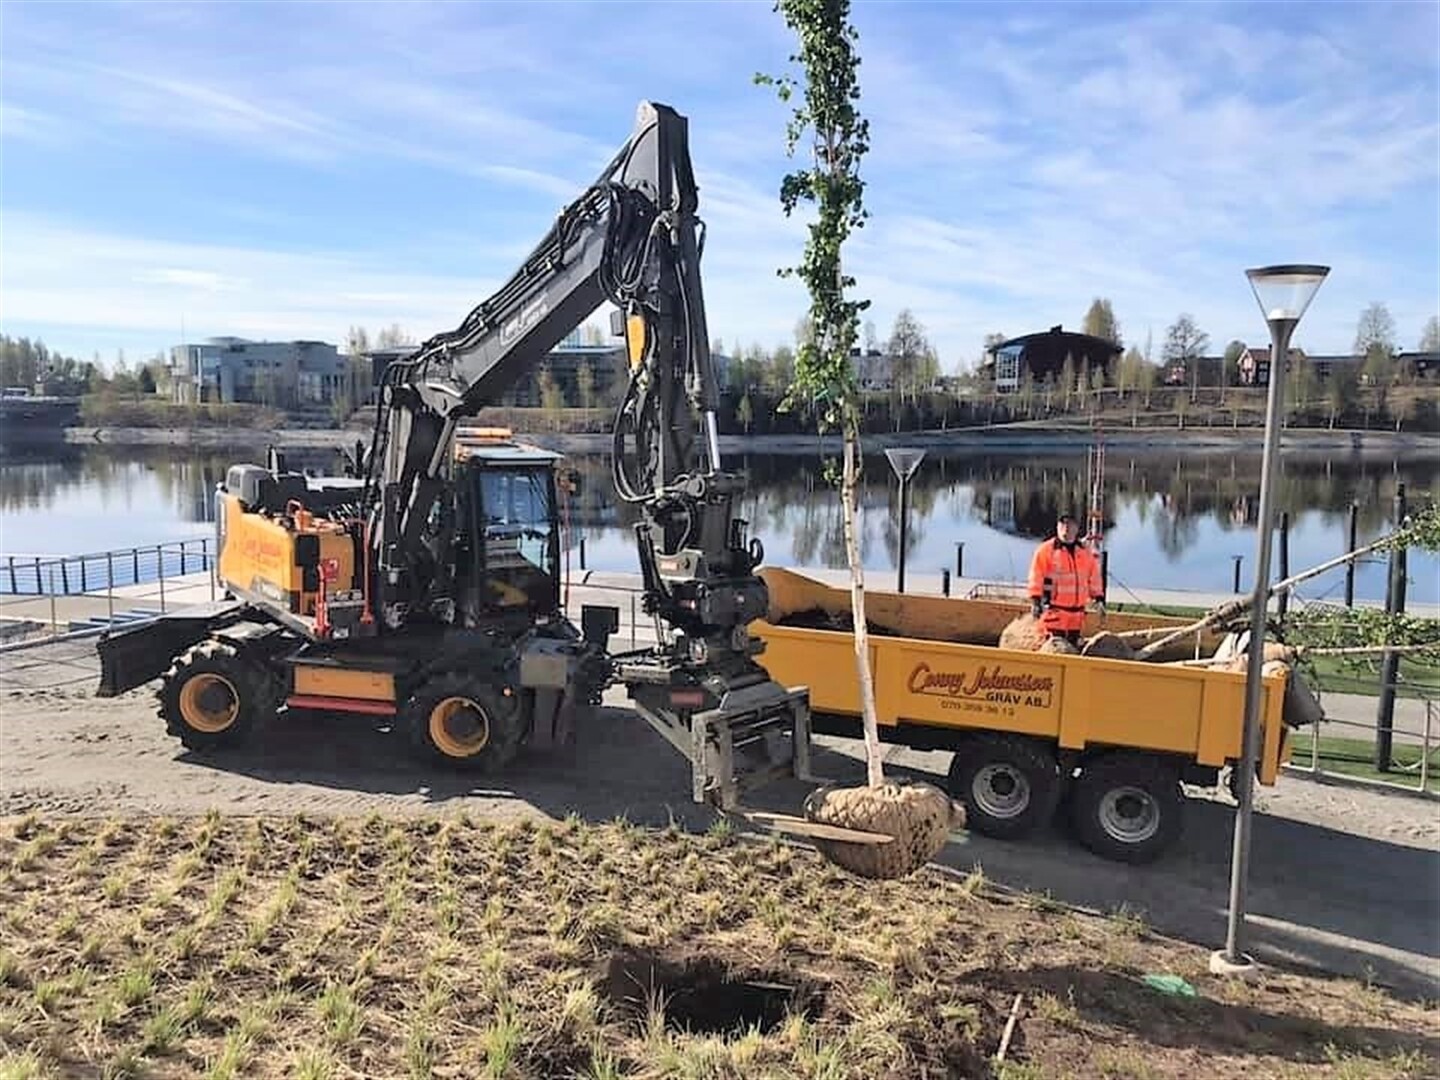 Mechanised tree planting Swedish style